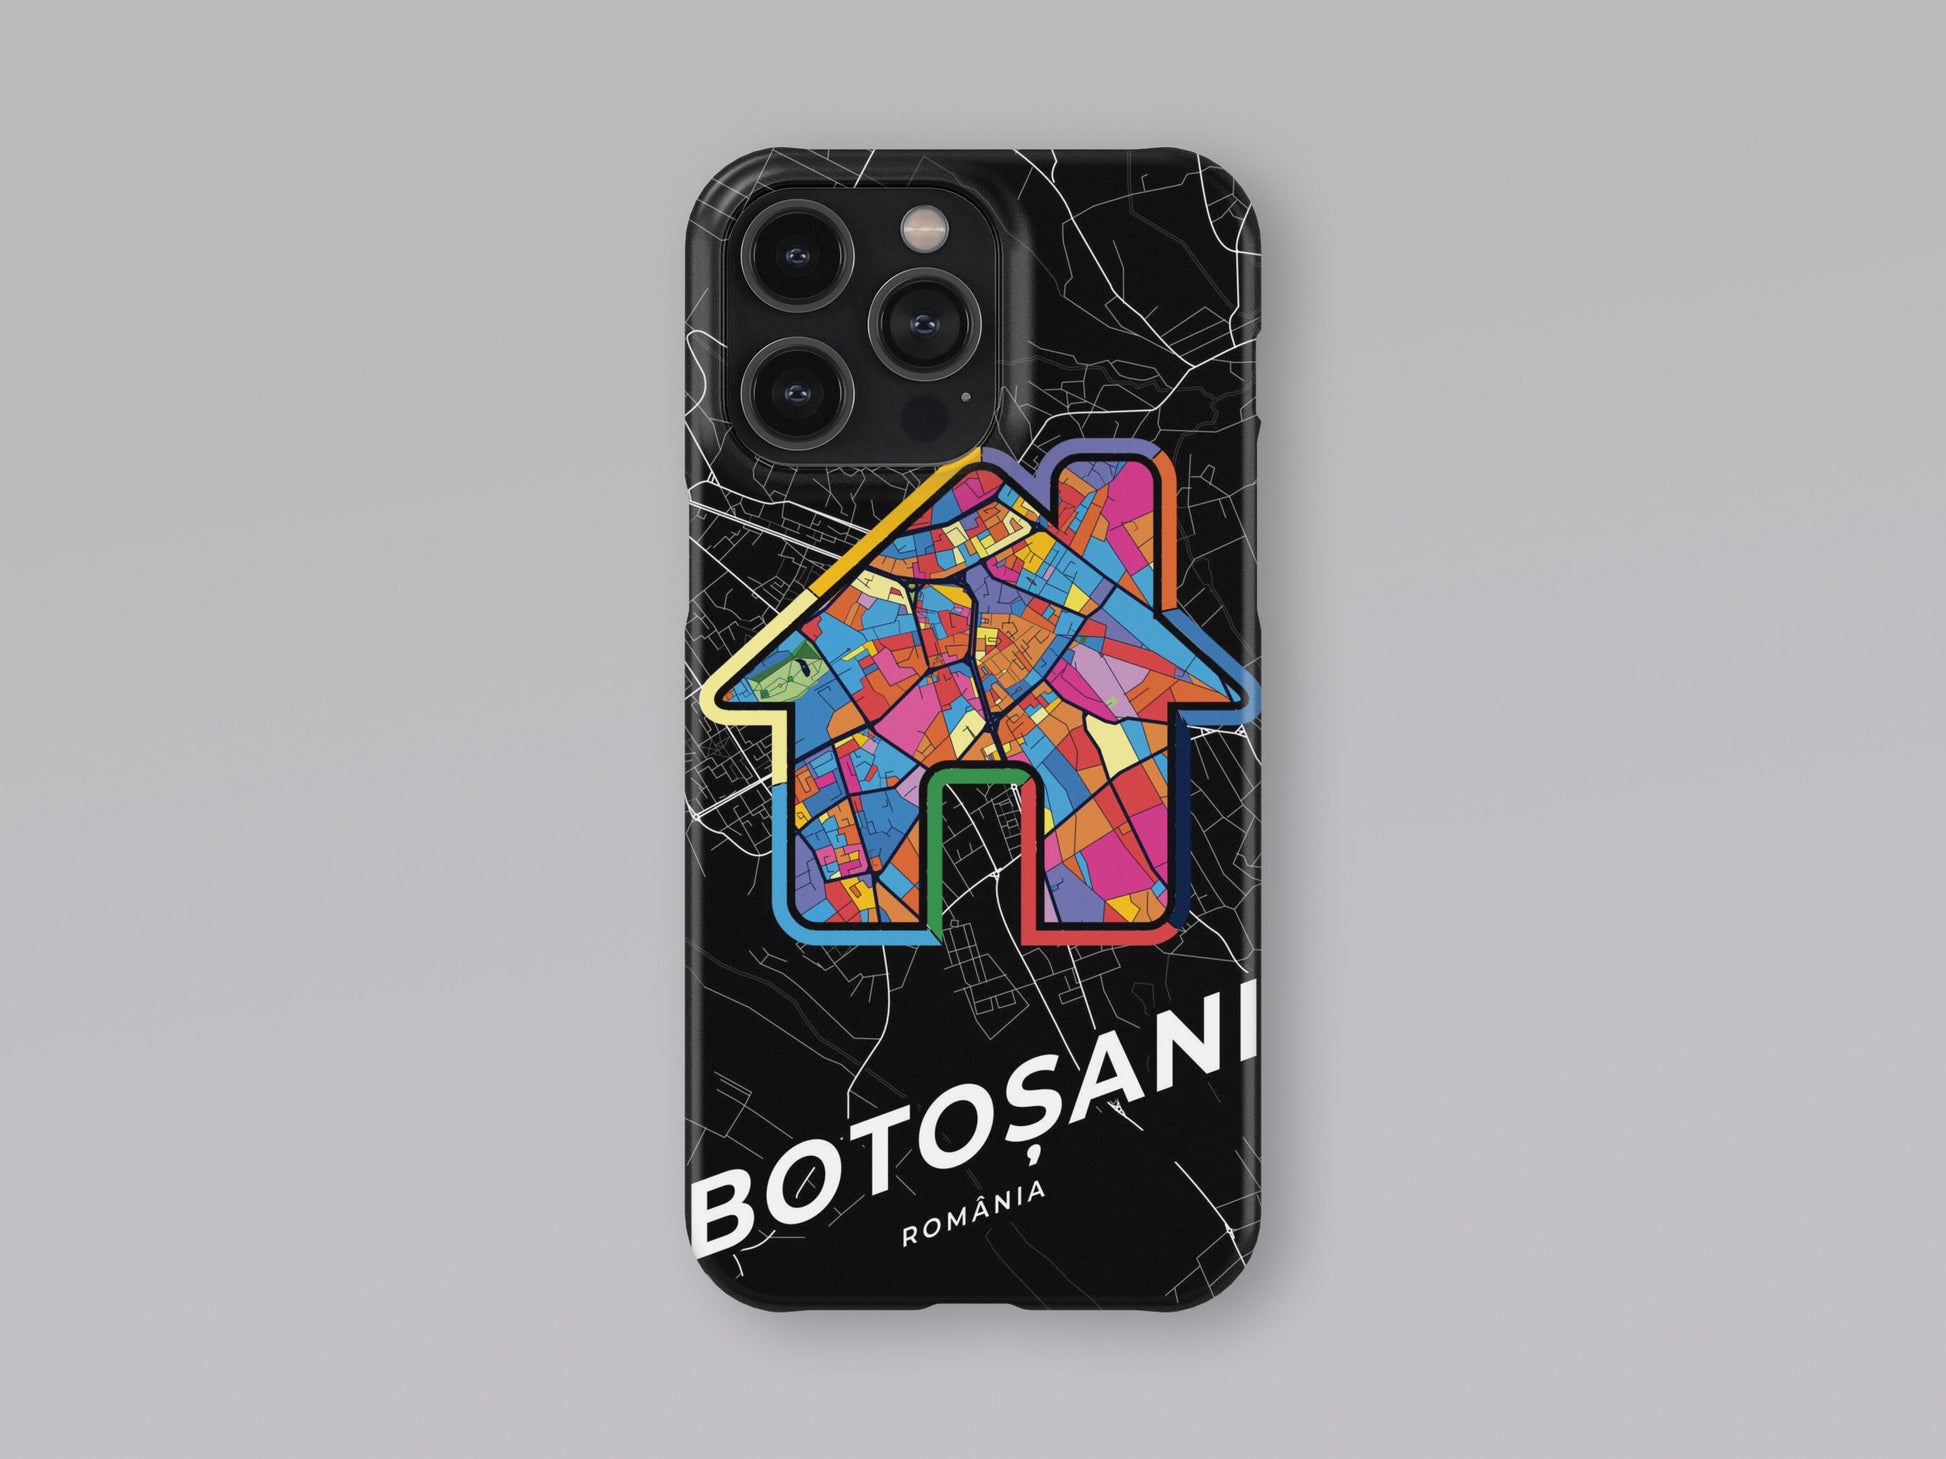 Botoșani Romania slim phone case with colorful icon. Birthday, wedding or housewarming gift. Couple match cases. 3